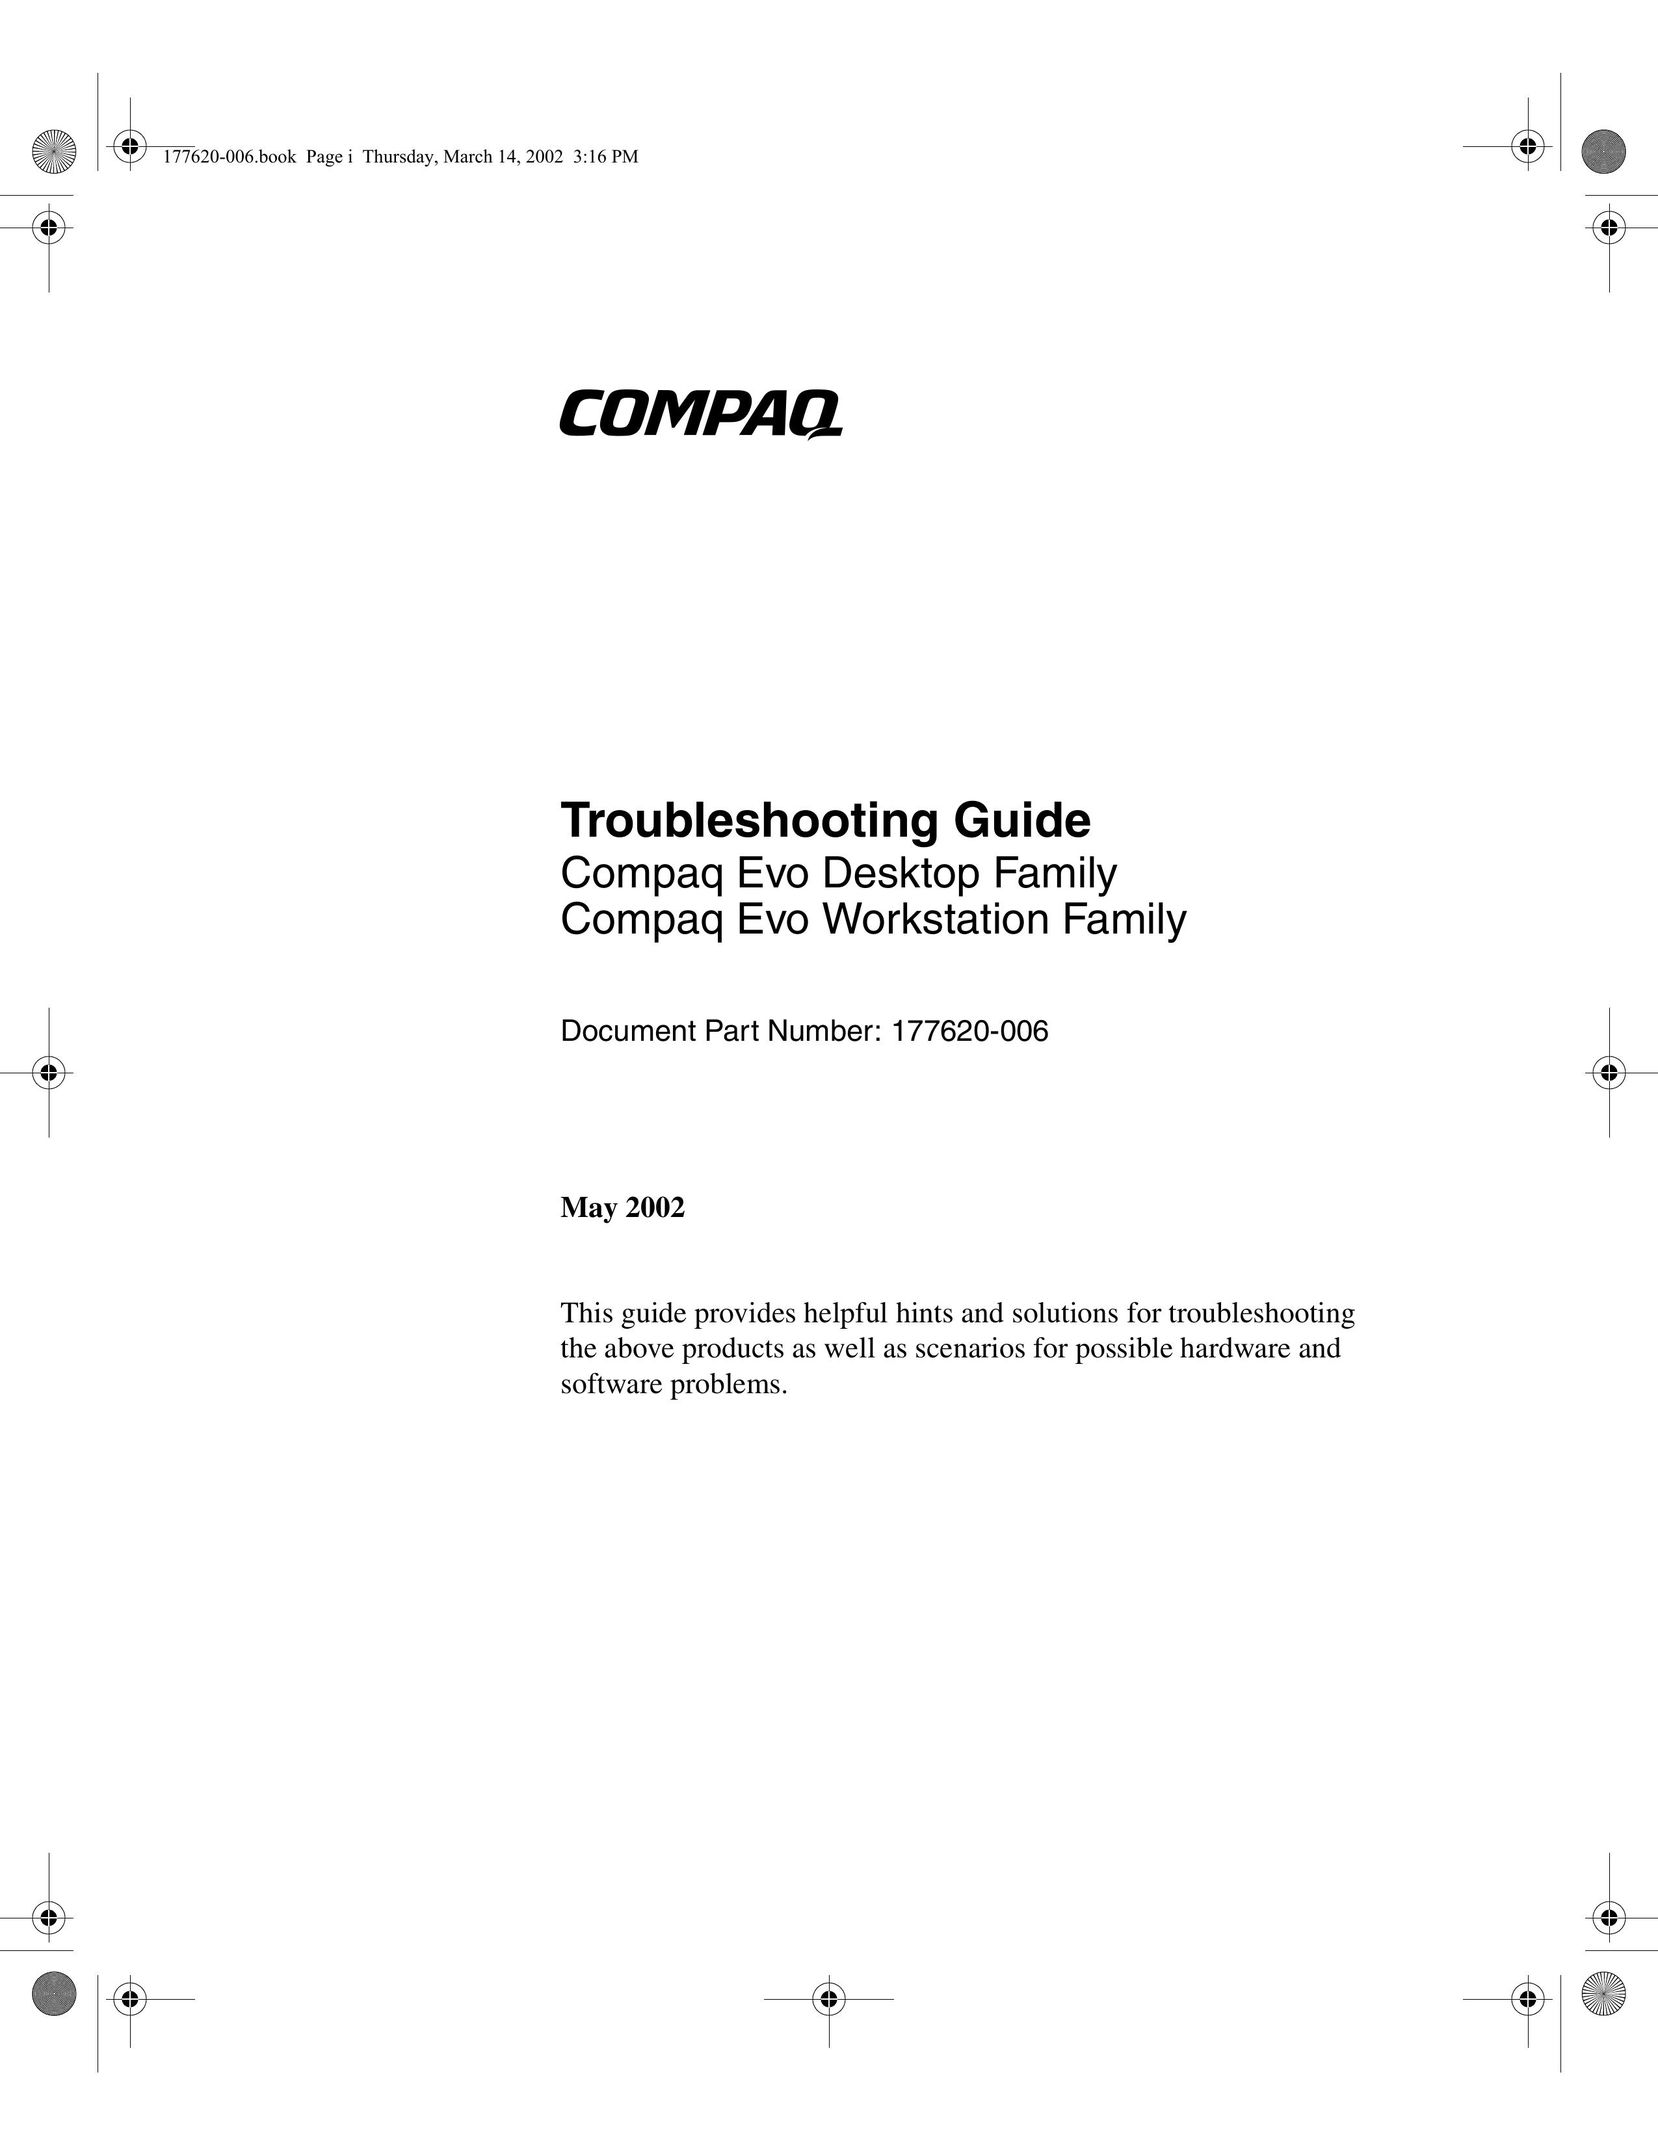 Compaq 177620-006 Computer Hardware User Manual